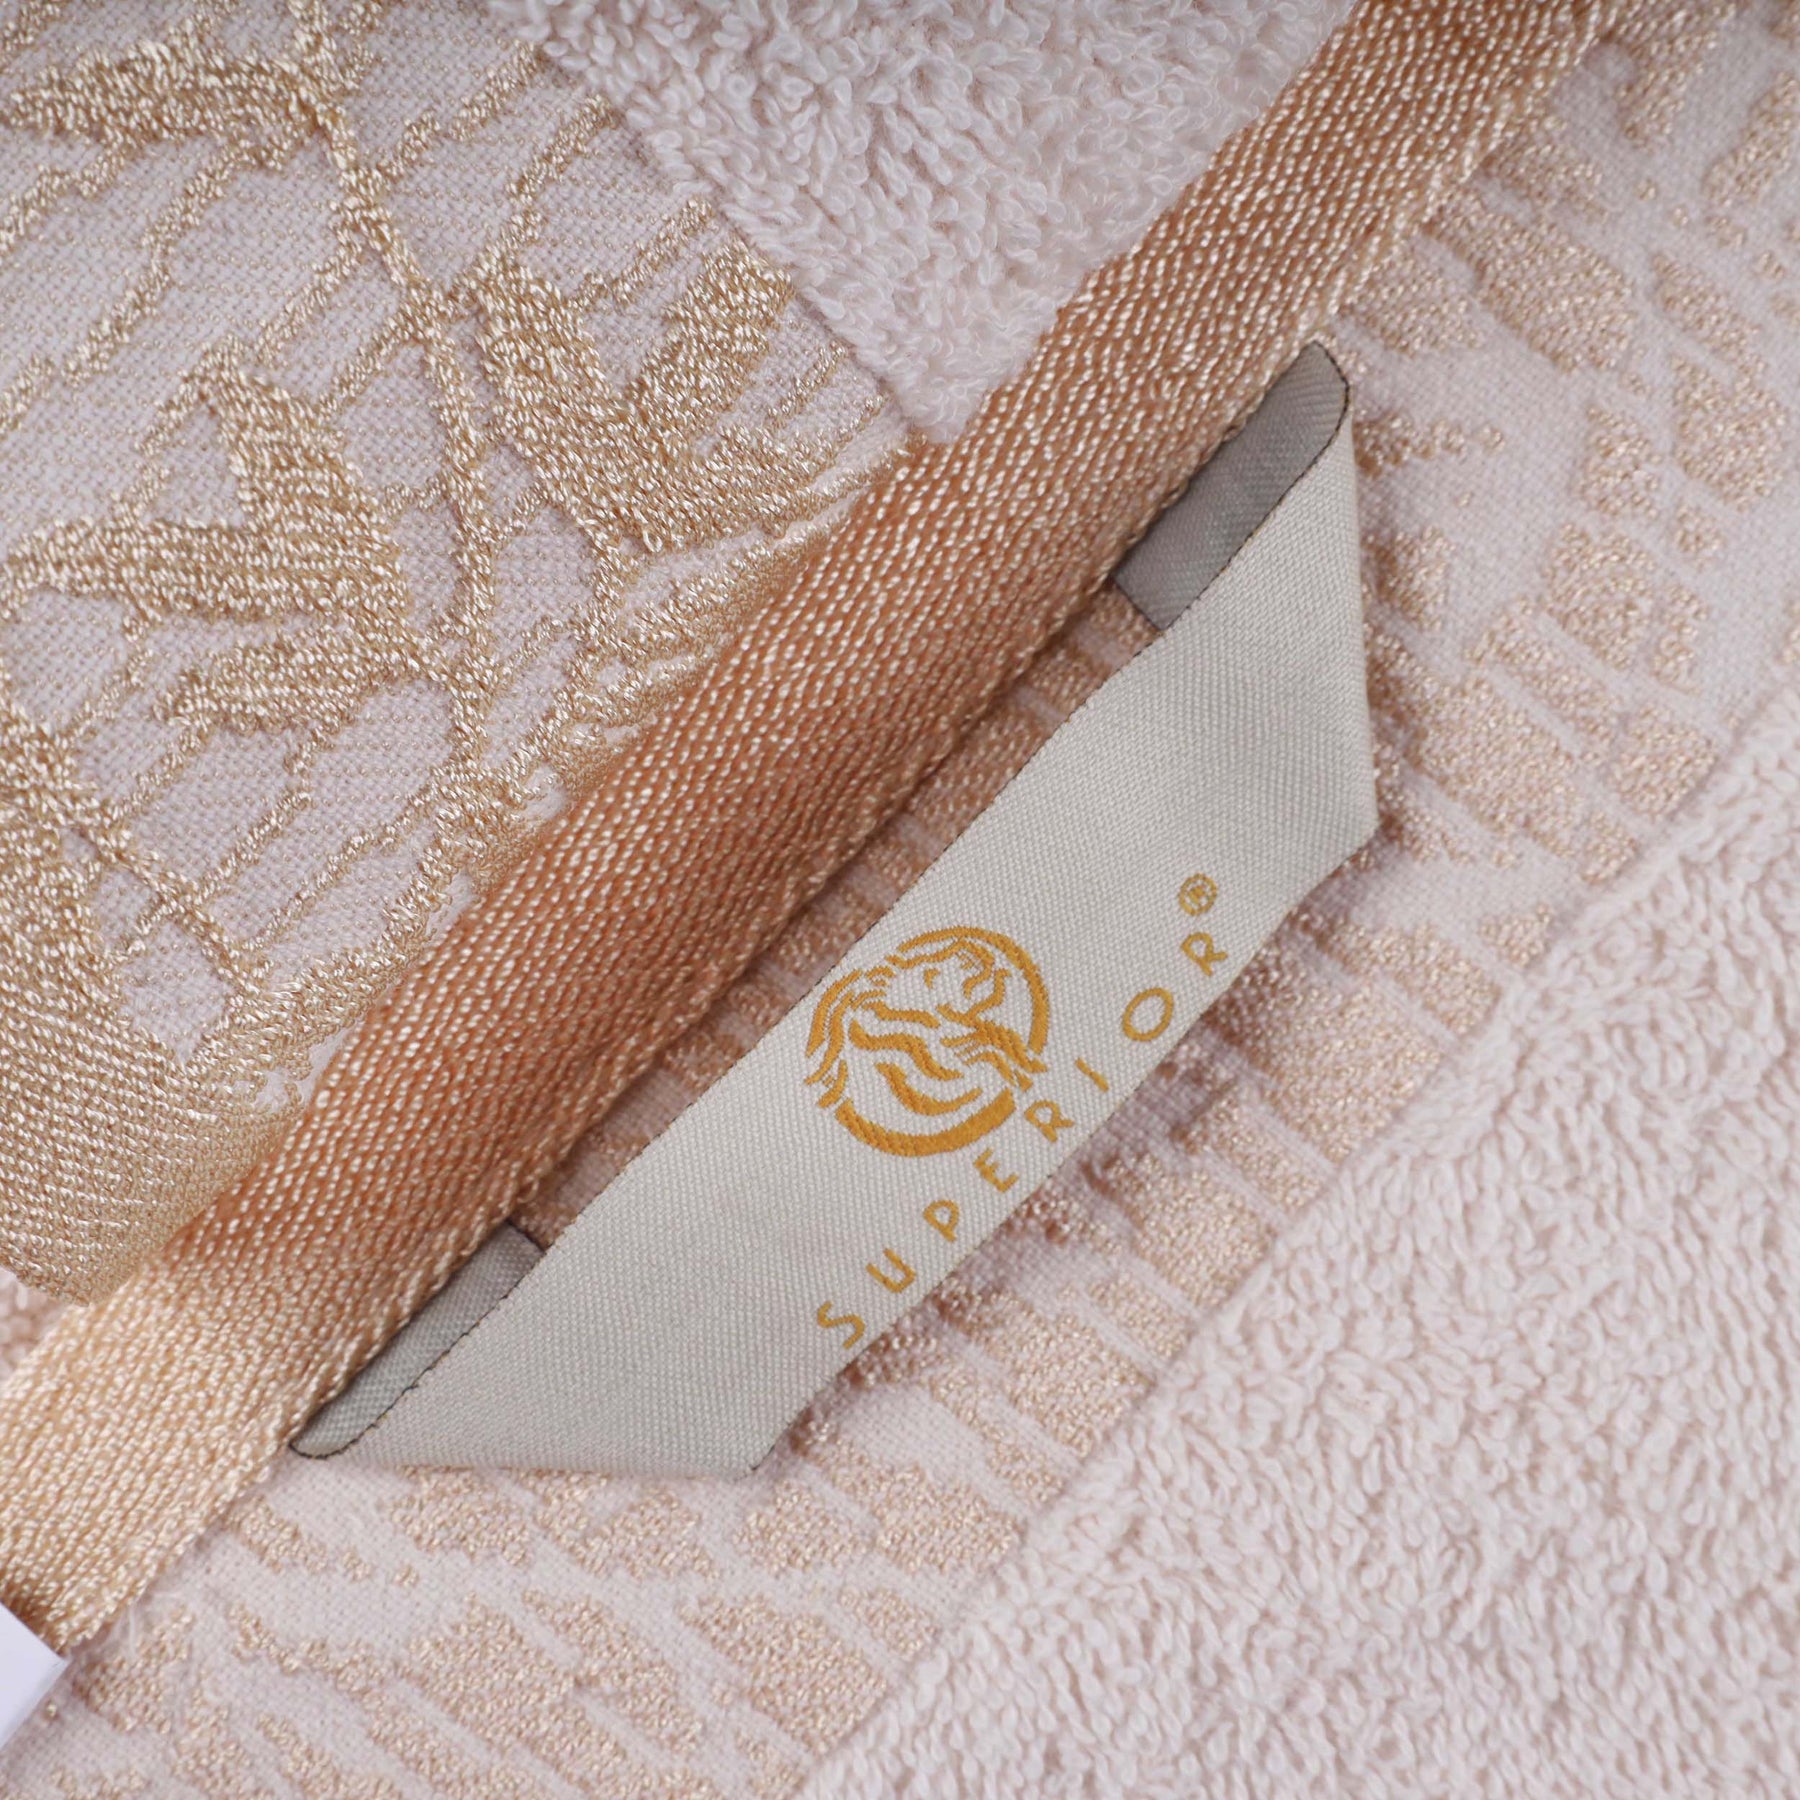 Superior Wisteria Cotton Floral Jacquard 3 Piece Towel Set - Ivory